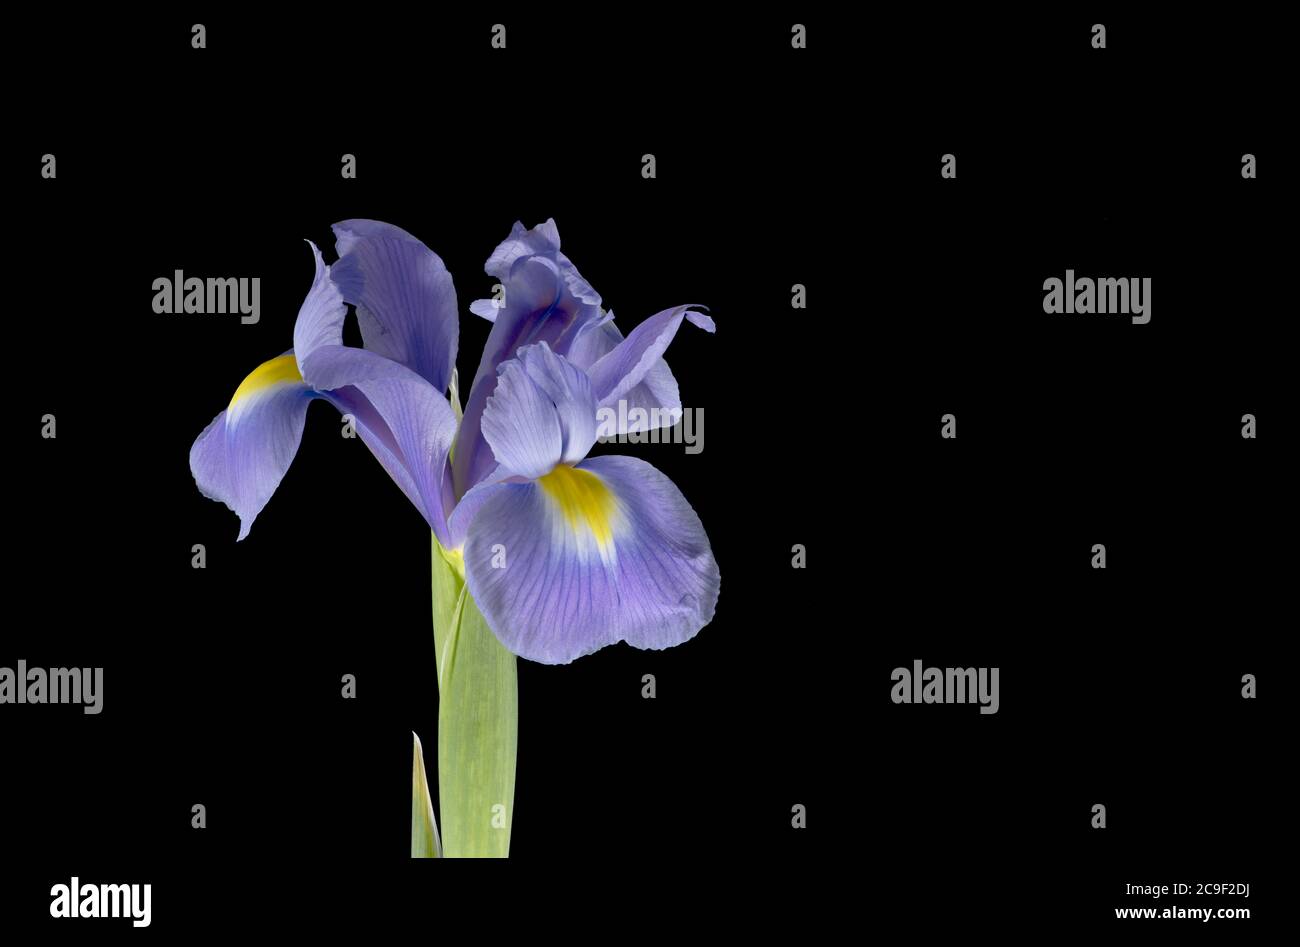 Purple Iris photographed against a plain black background Stock Photo